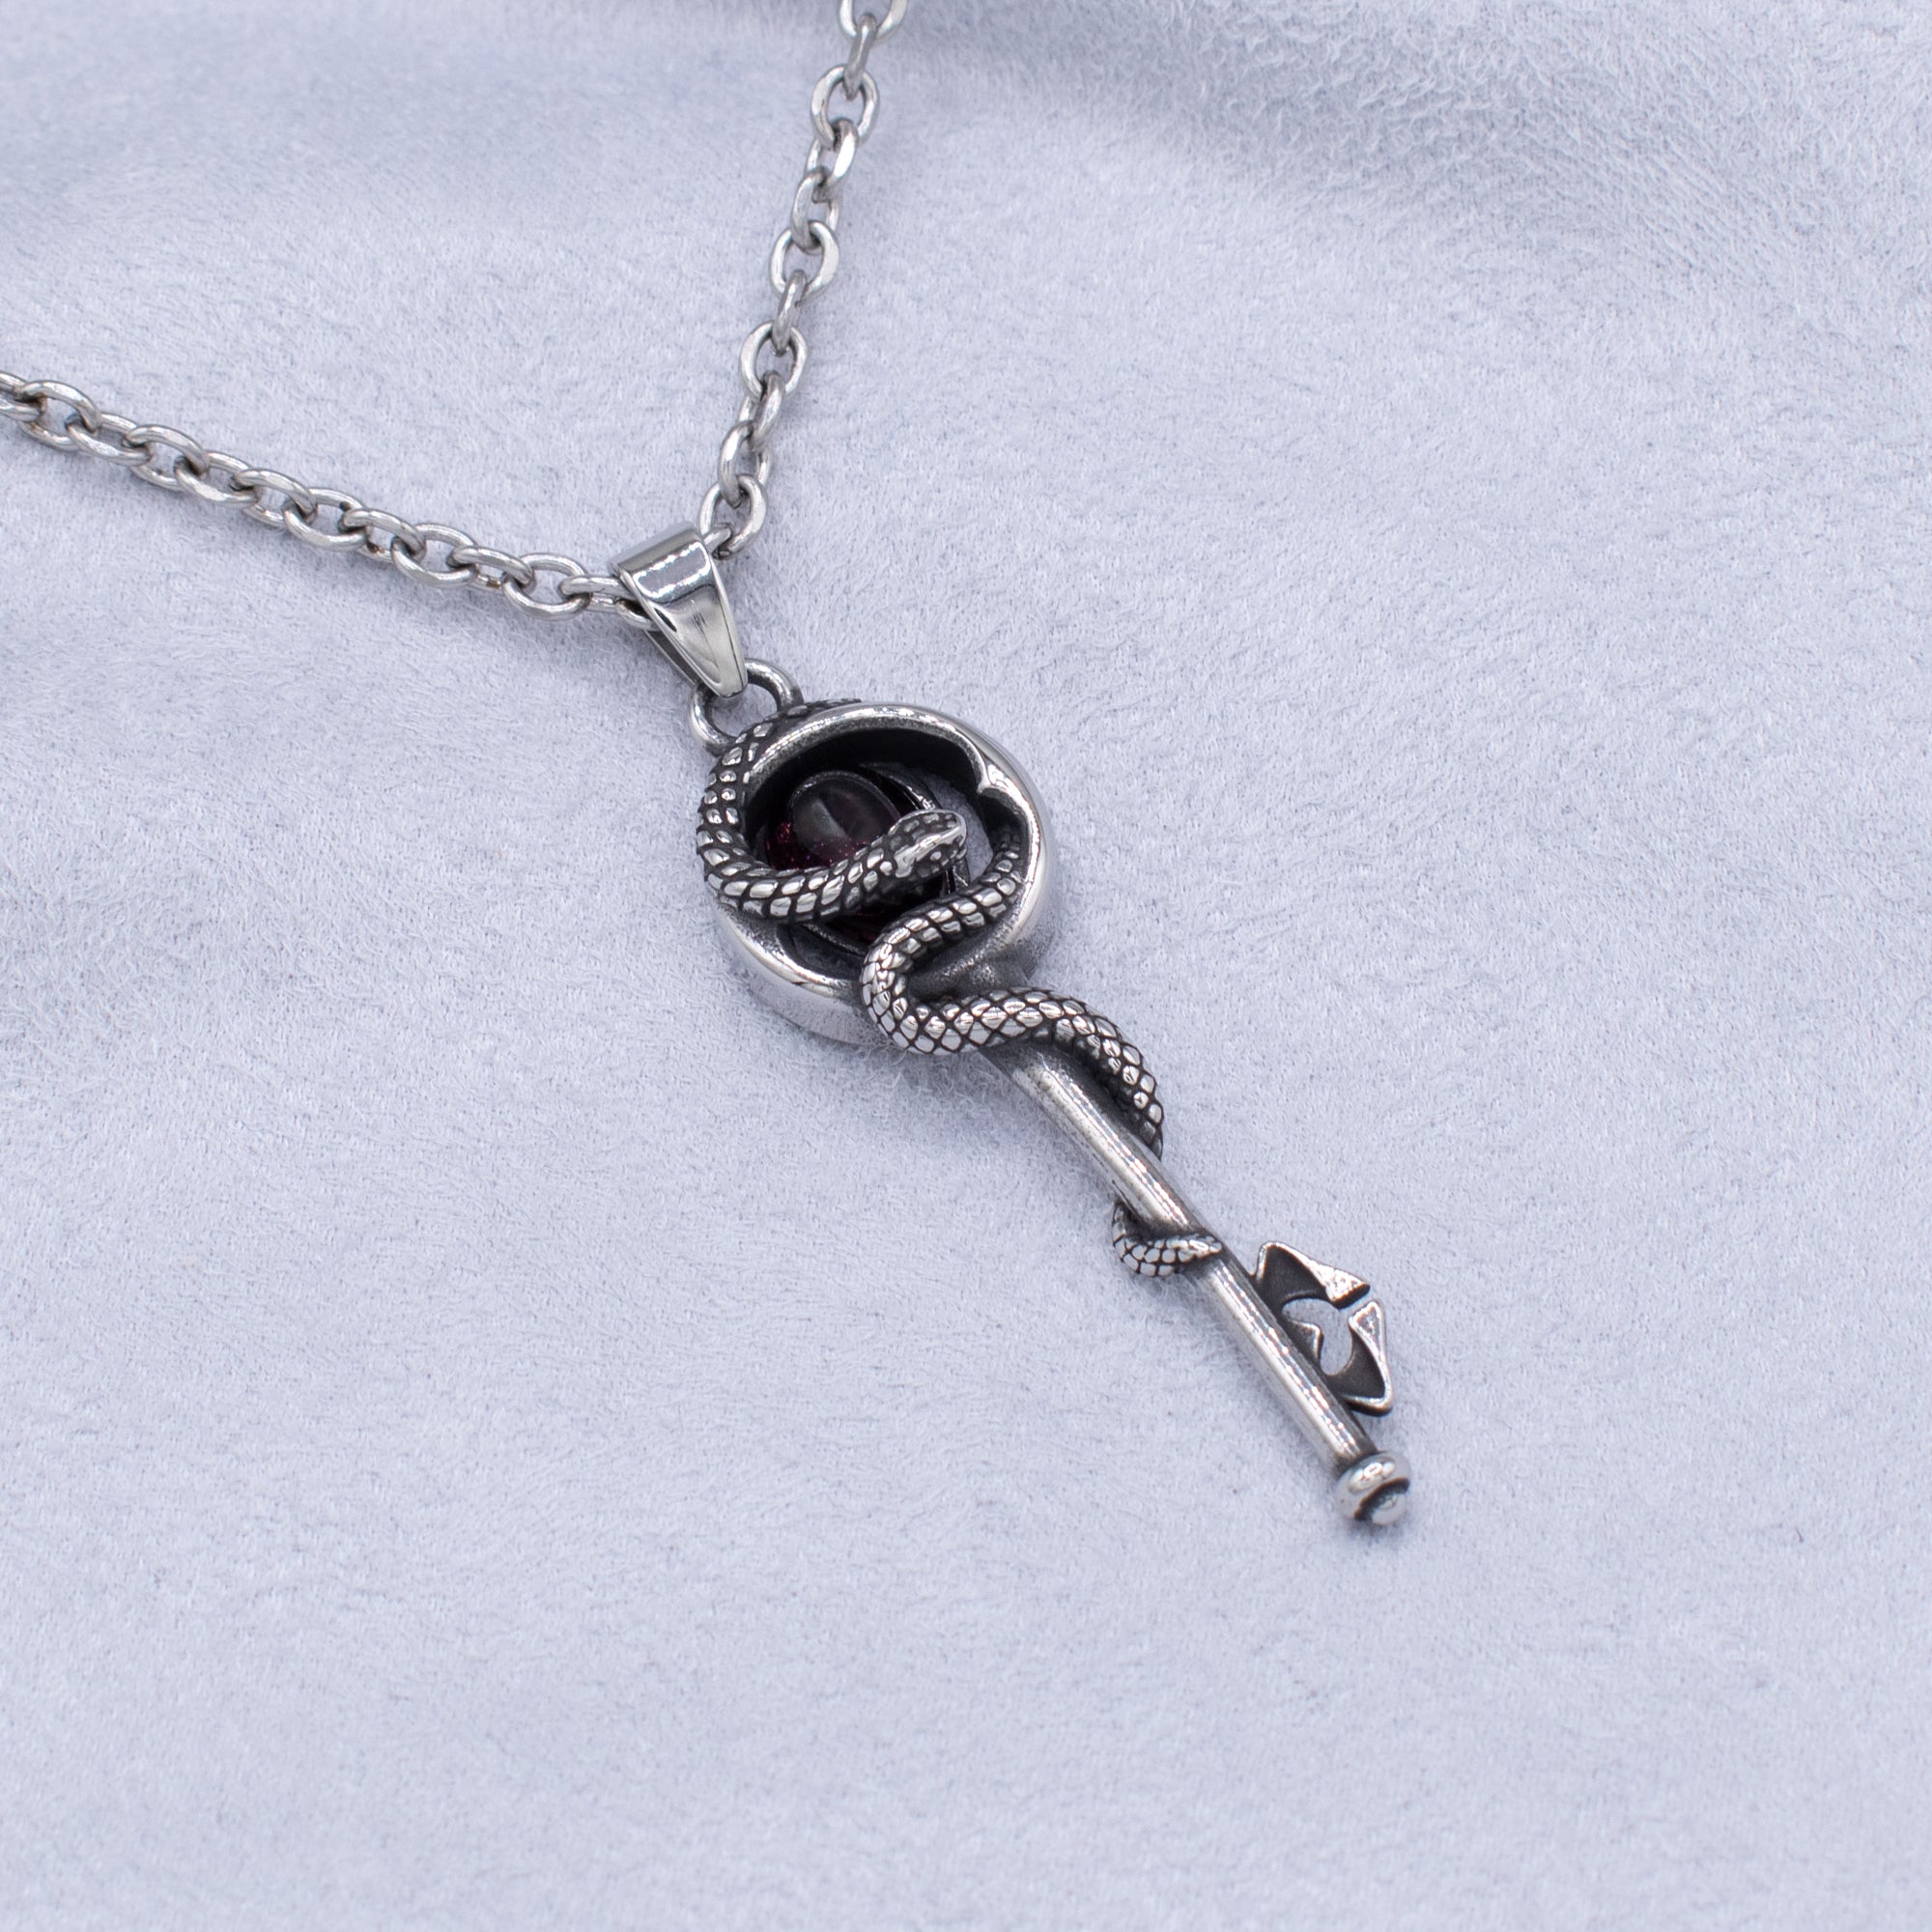 The Key Holder Serpent Pendant Necklace